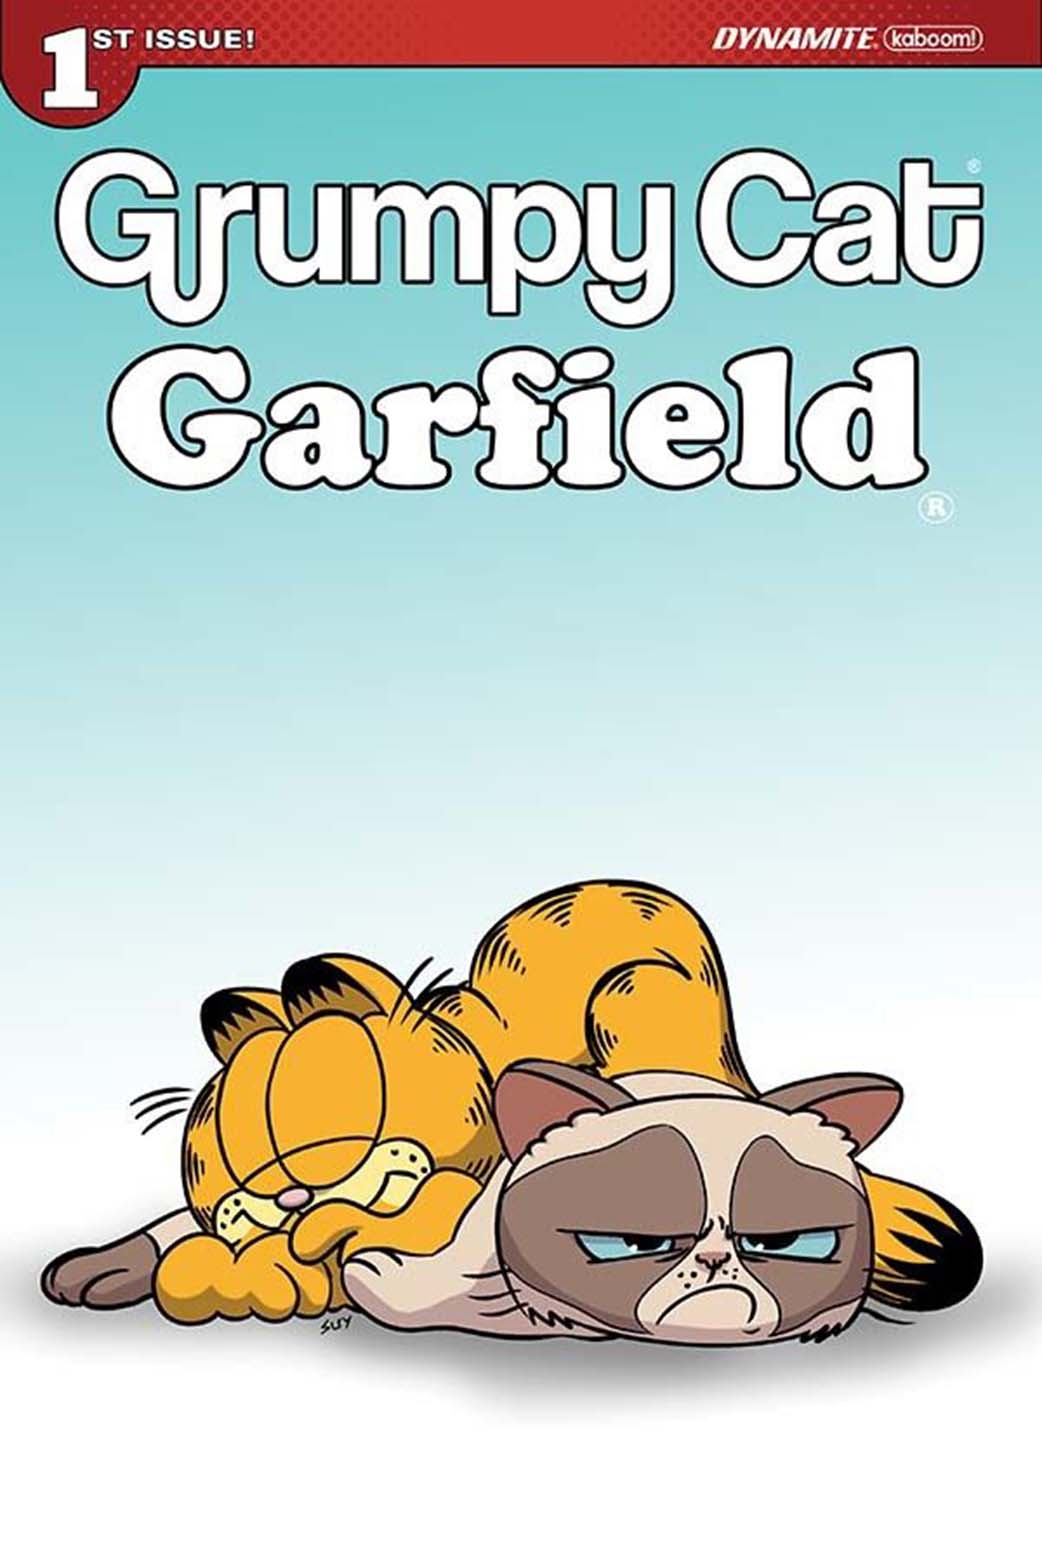 Notciario_Garfield_2